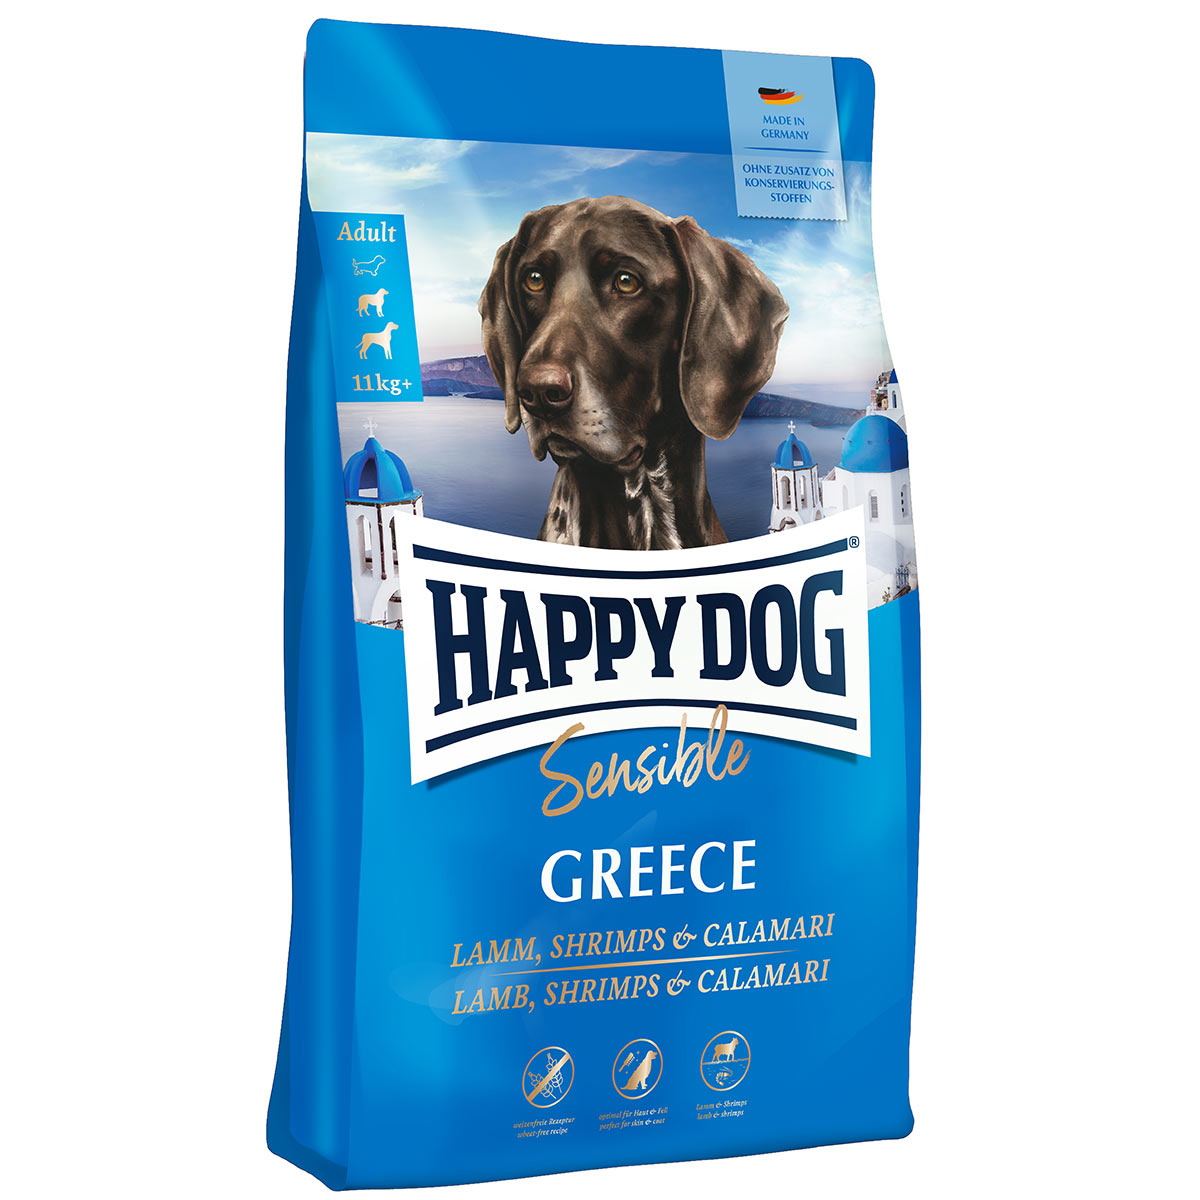 Happy Dog Supreme Sensible Greece 2x11kg